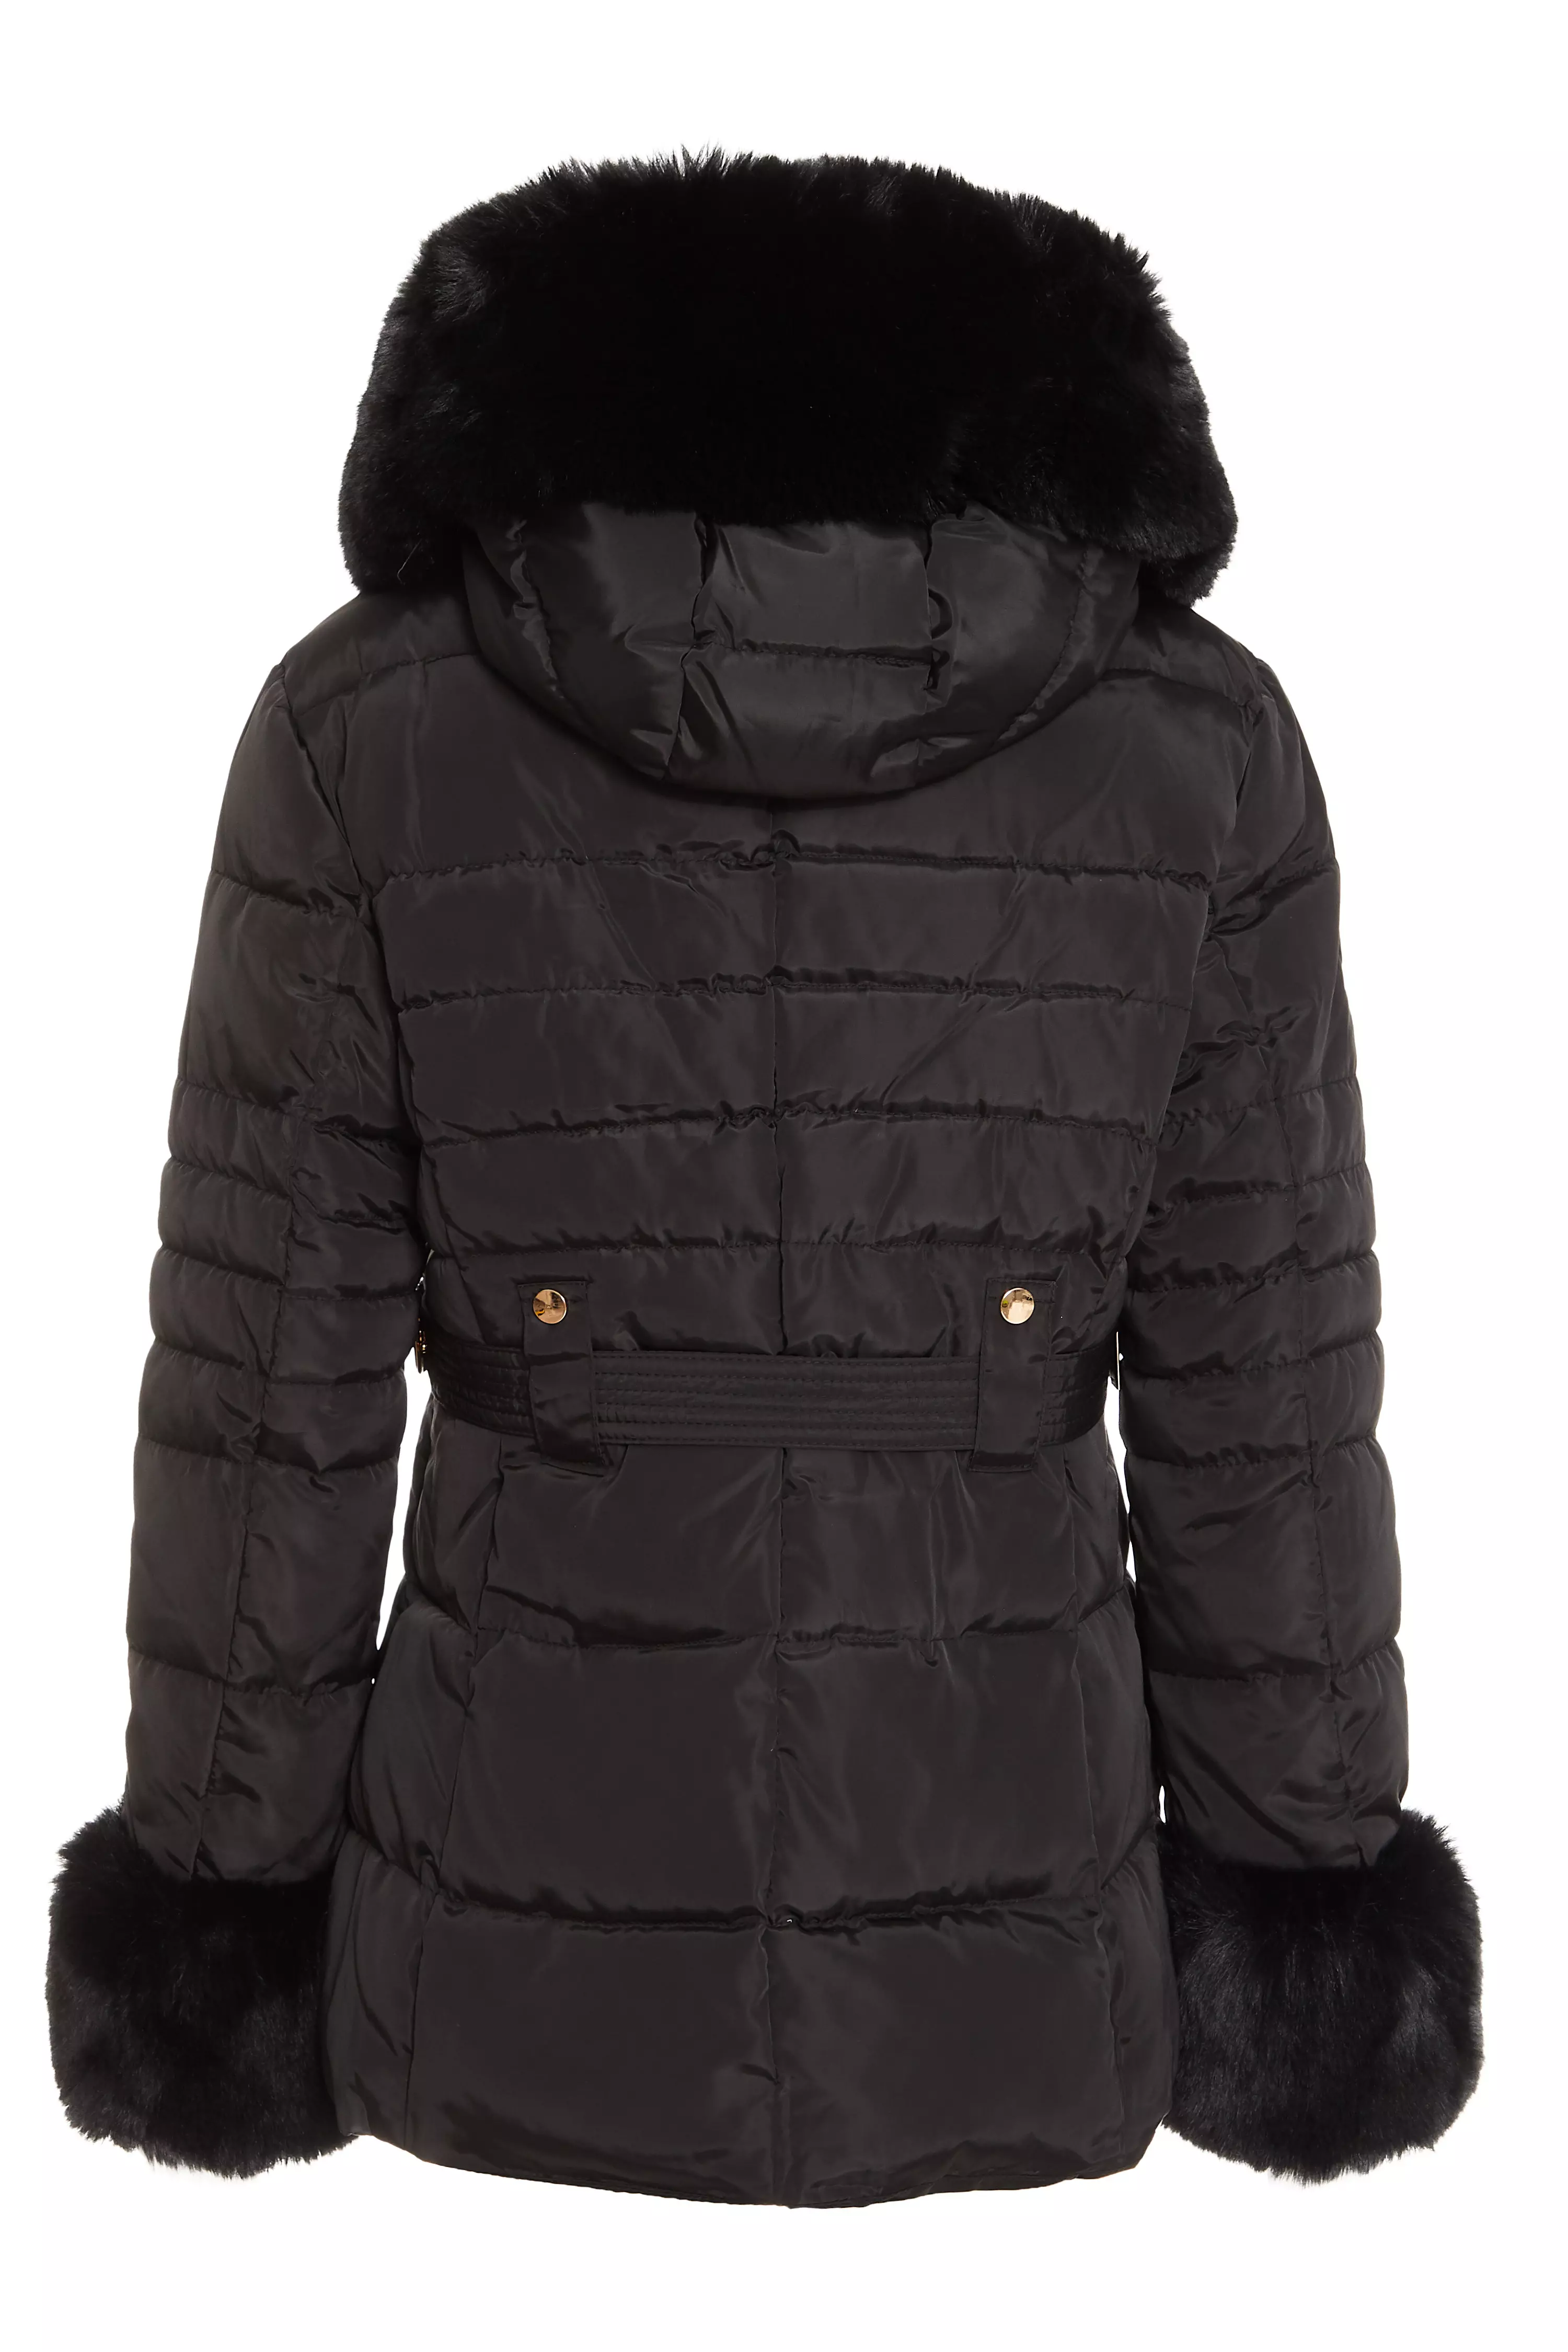 Black Padded Faux Fur Trim Jacket - QUIZ Clothing